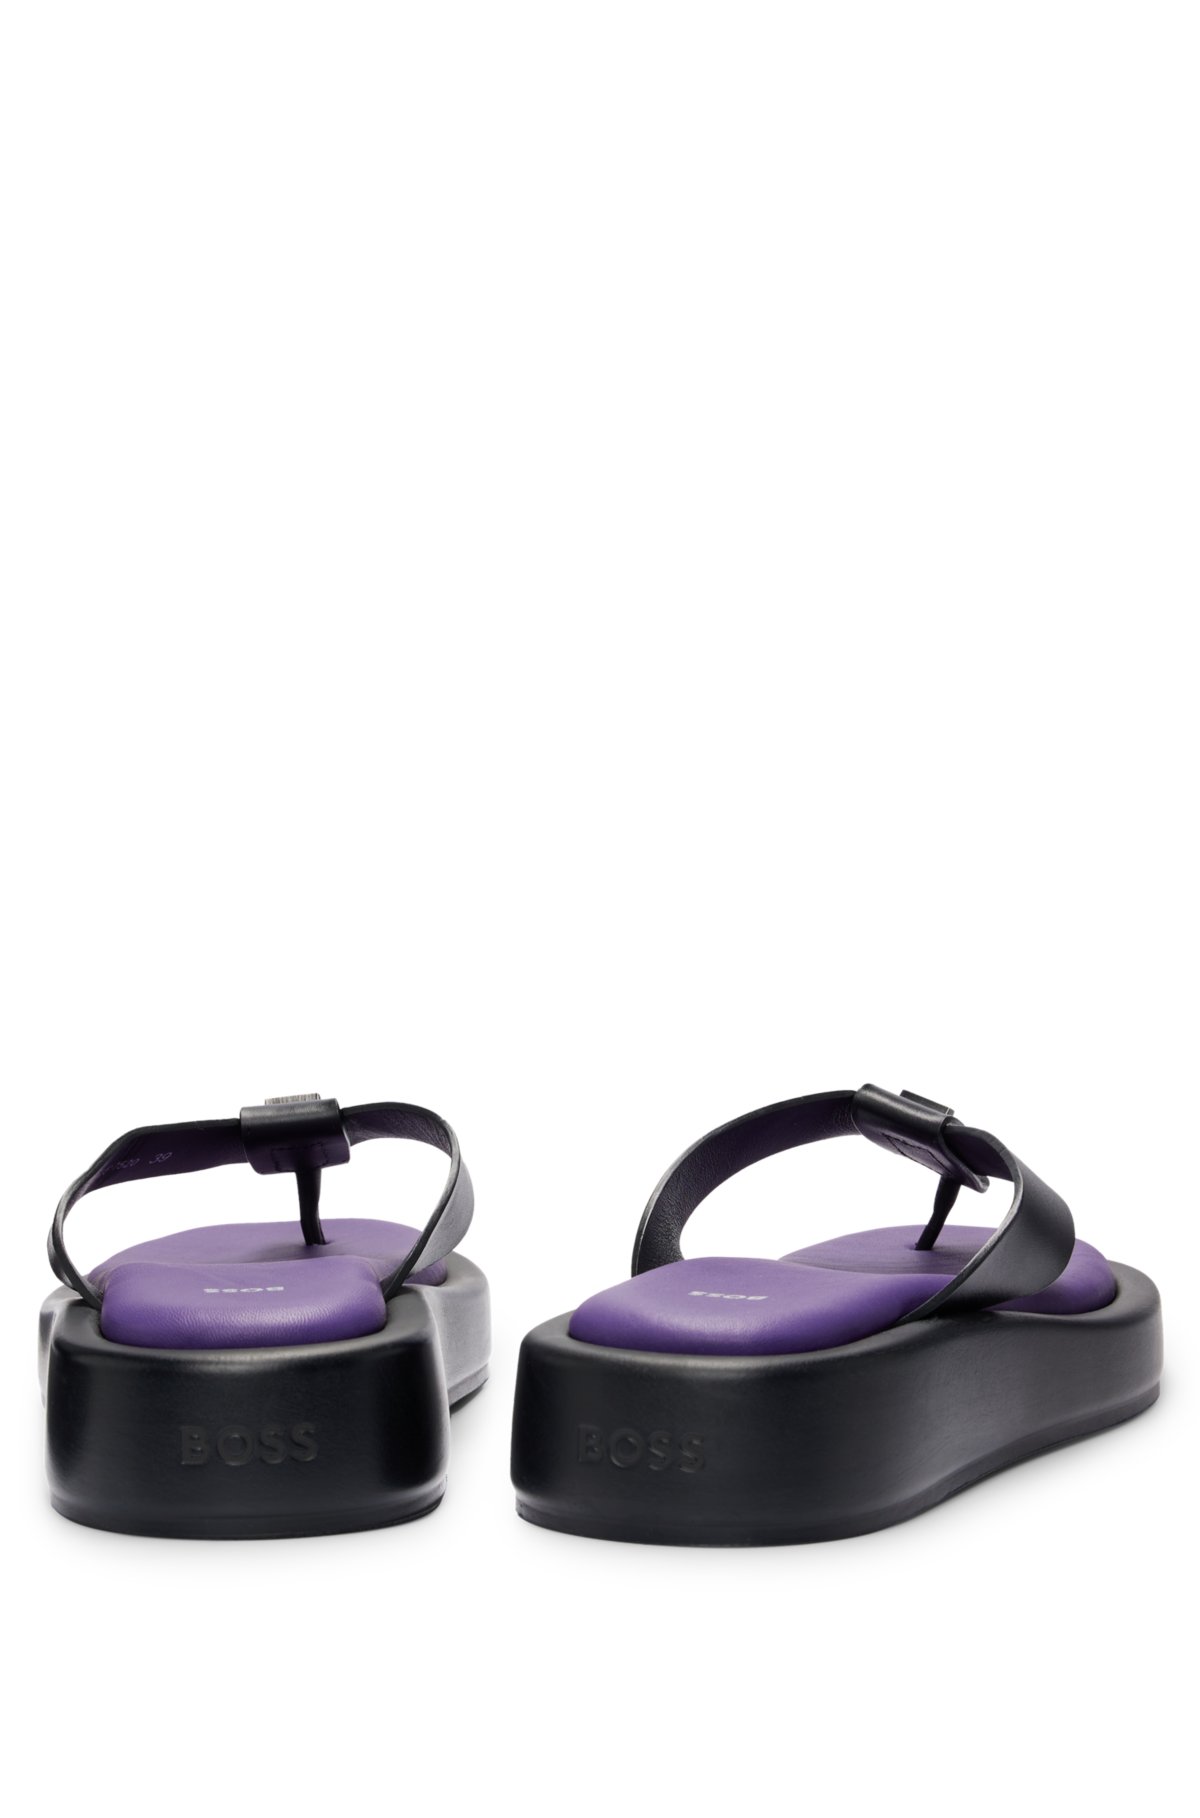 NAOMI x BOSS leather platform thong sandals with branded trim, Dark Purple